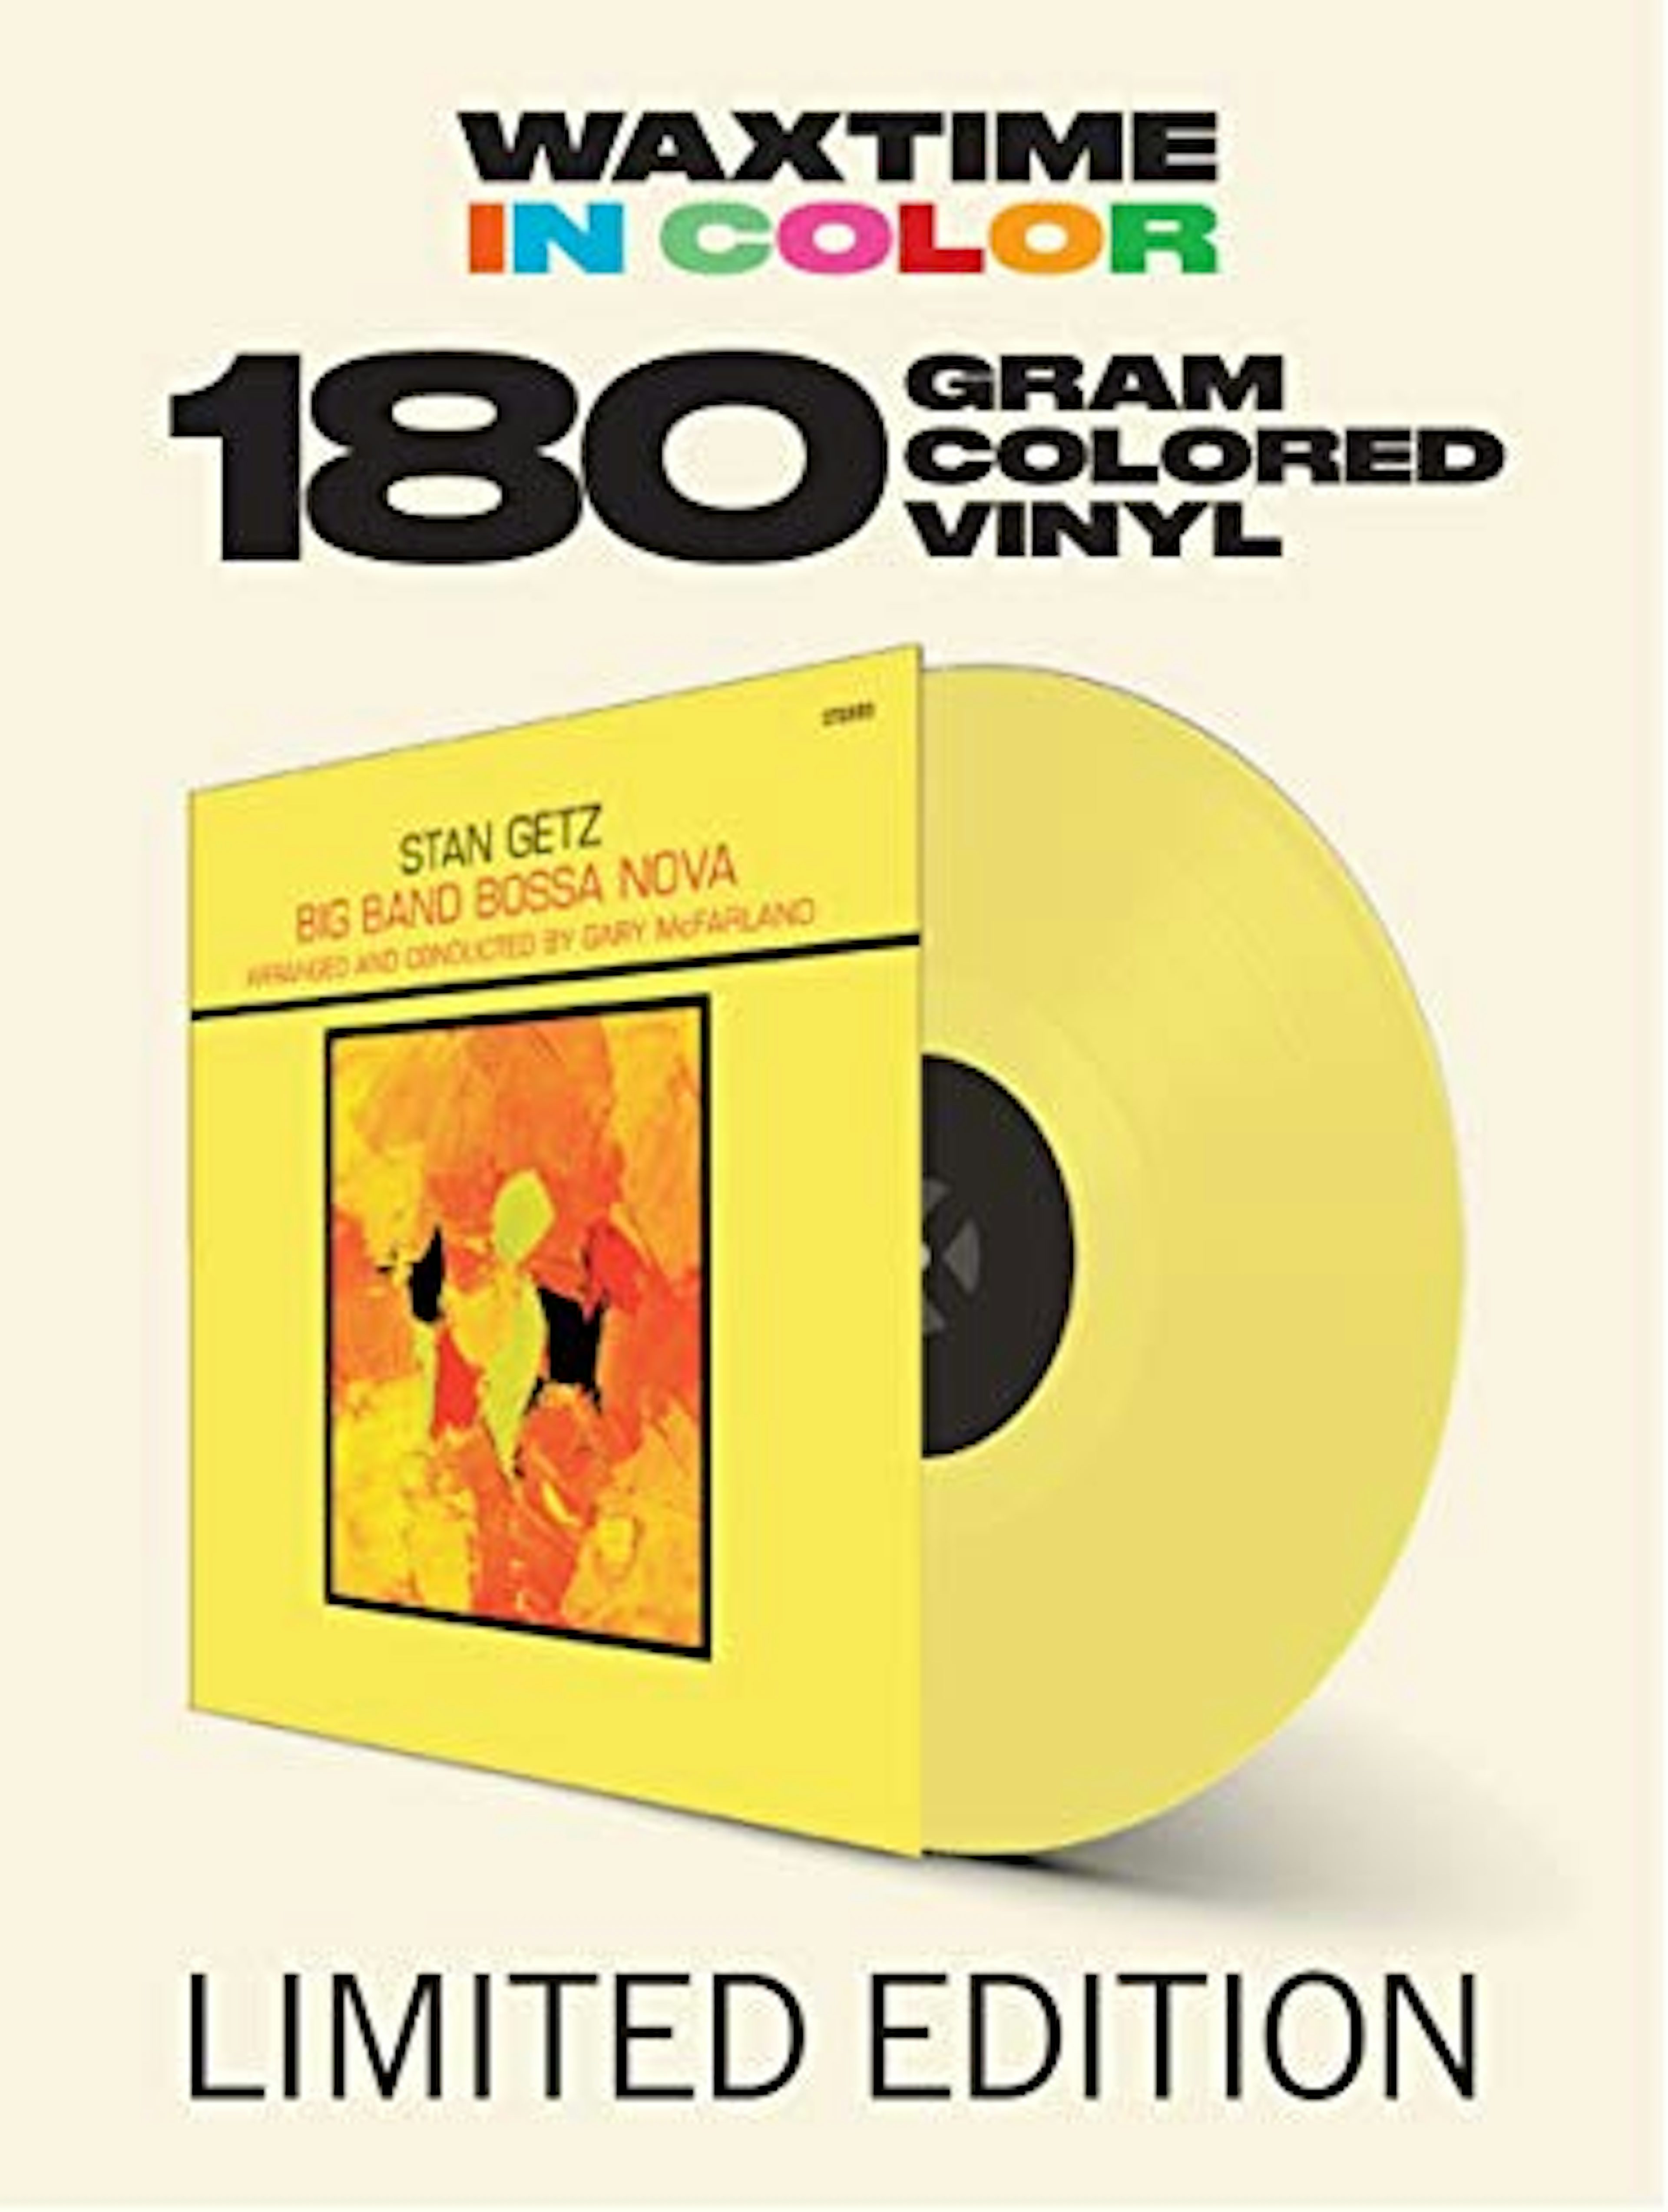 Stan Getz BIG BAND BOSSA NOVA Vinyl Record - Colored Gram Pressing, Yellow Vinyl, Spain Release